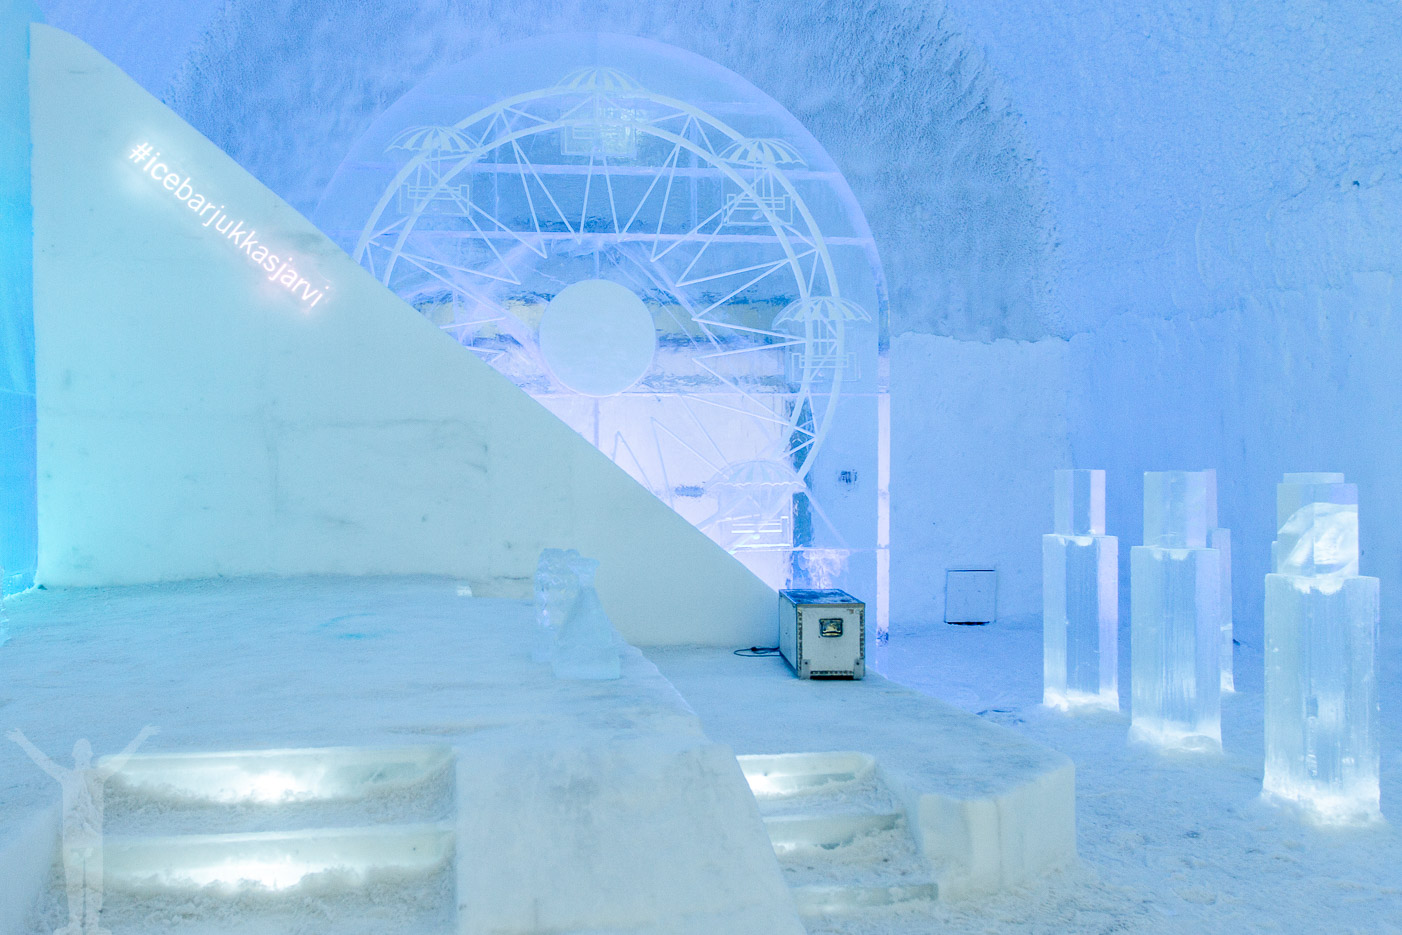 Icebar by Jukkasjärvi